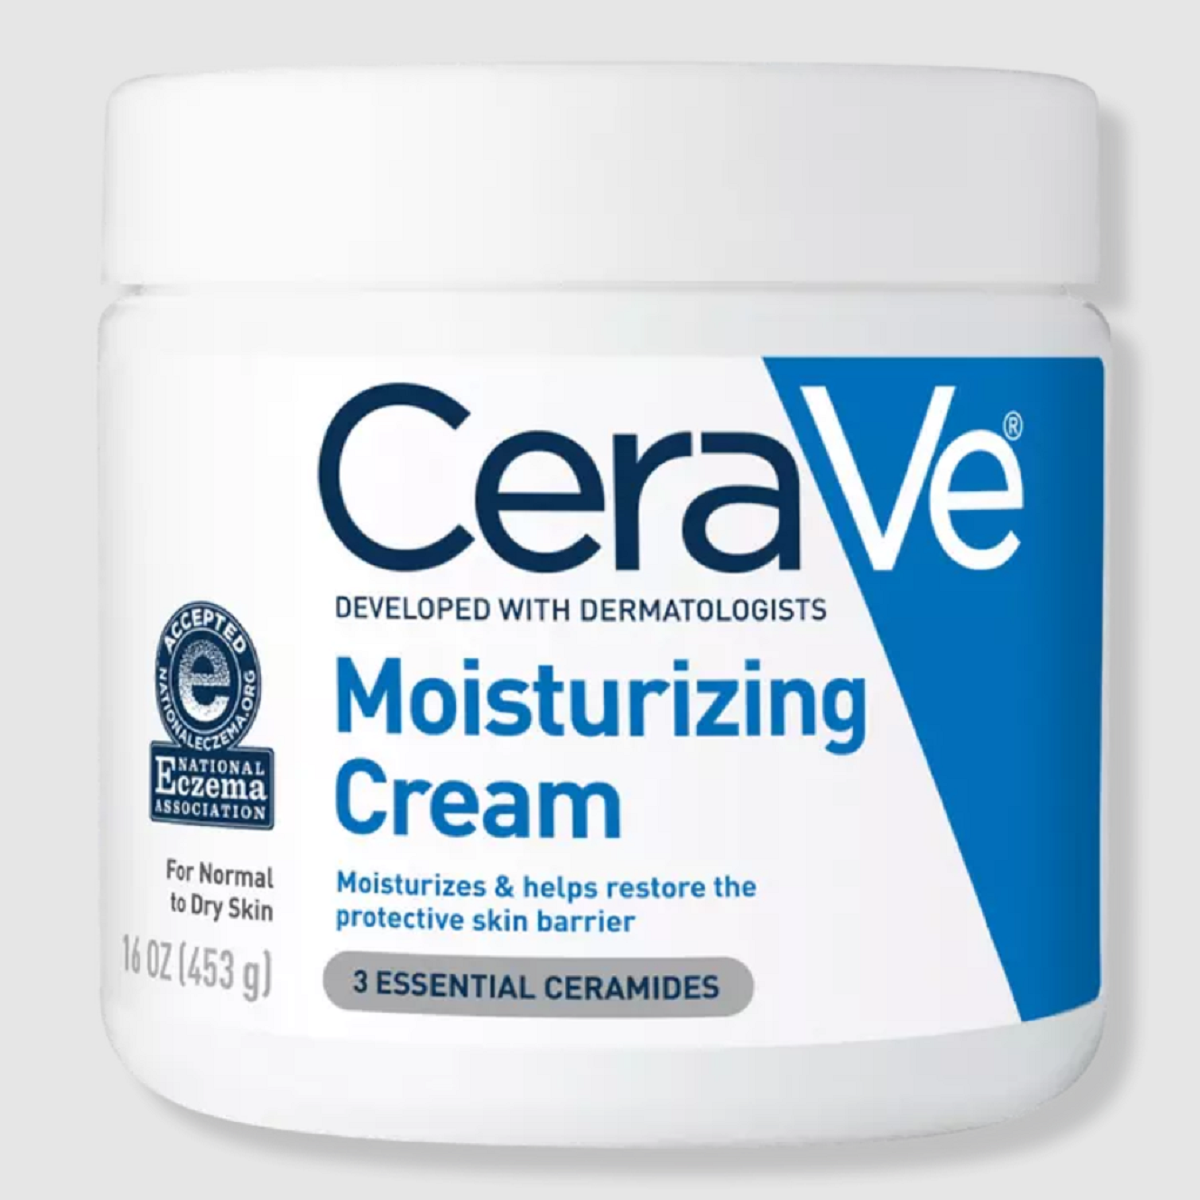 Cerave Skincare Moisturizers Buy 1 Get 1 40% Off at Ulta Beauty